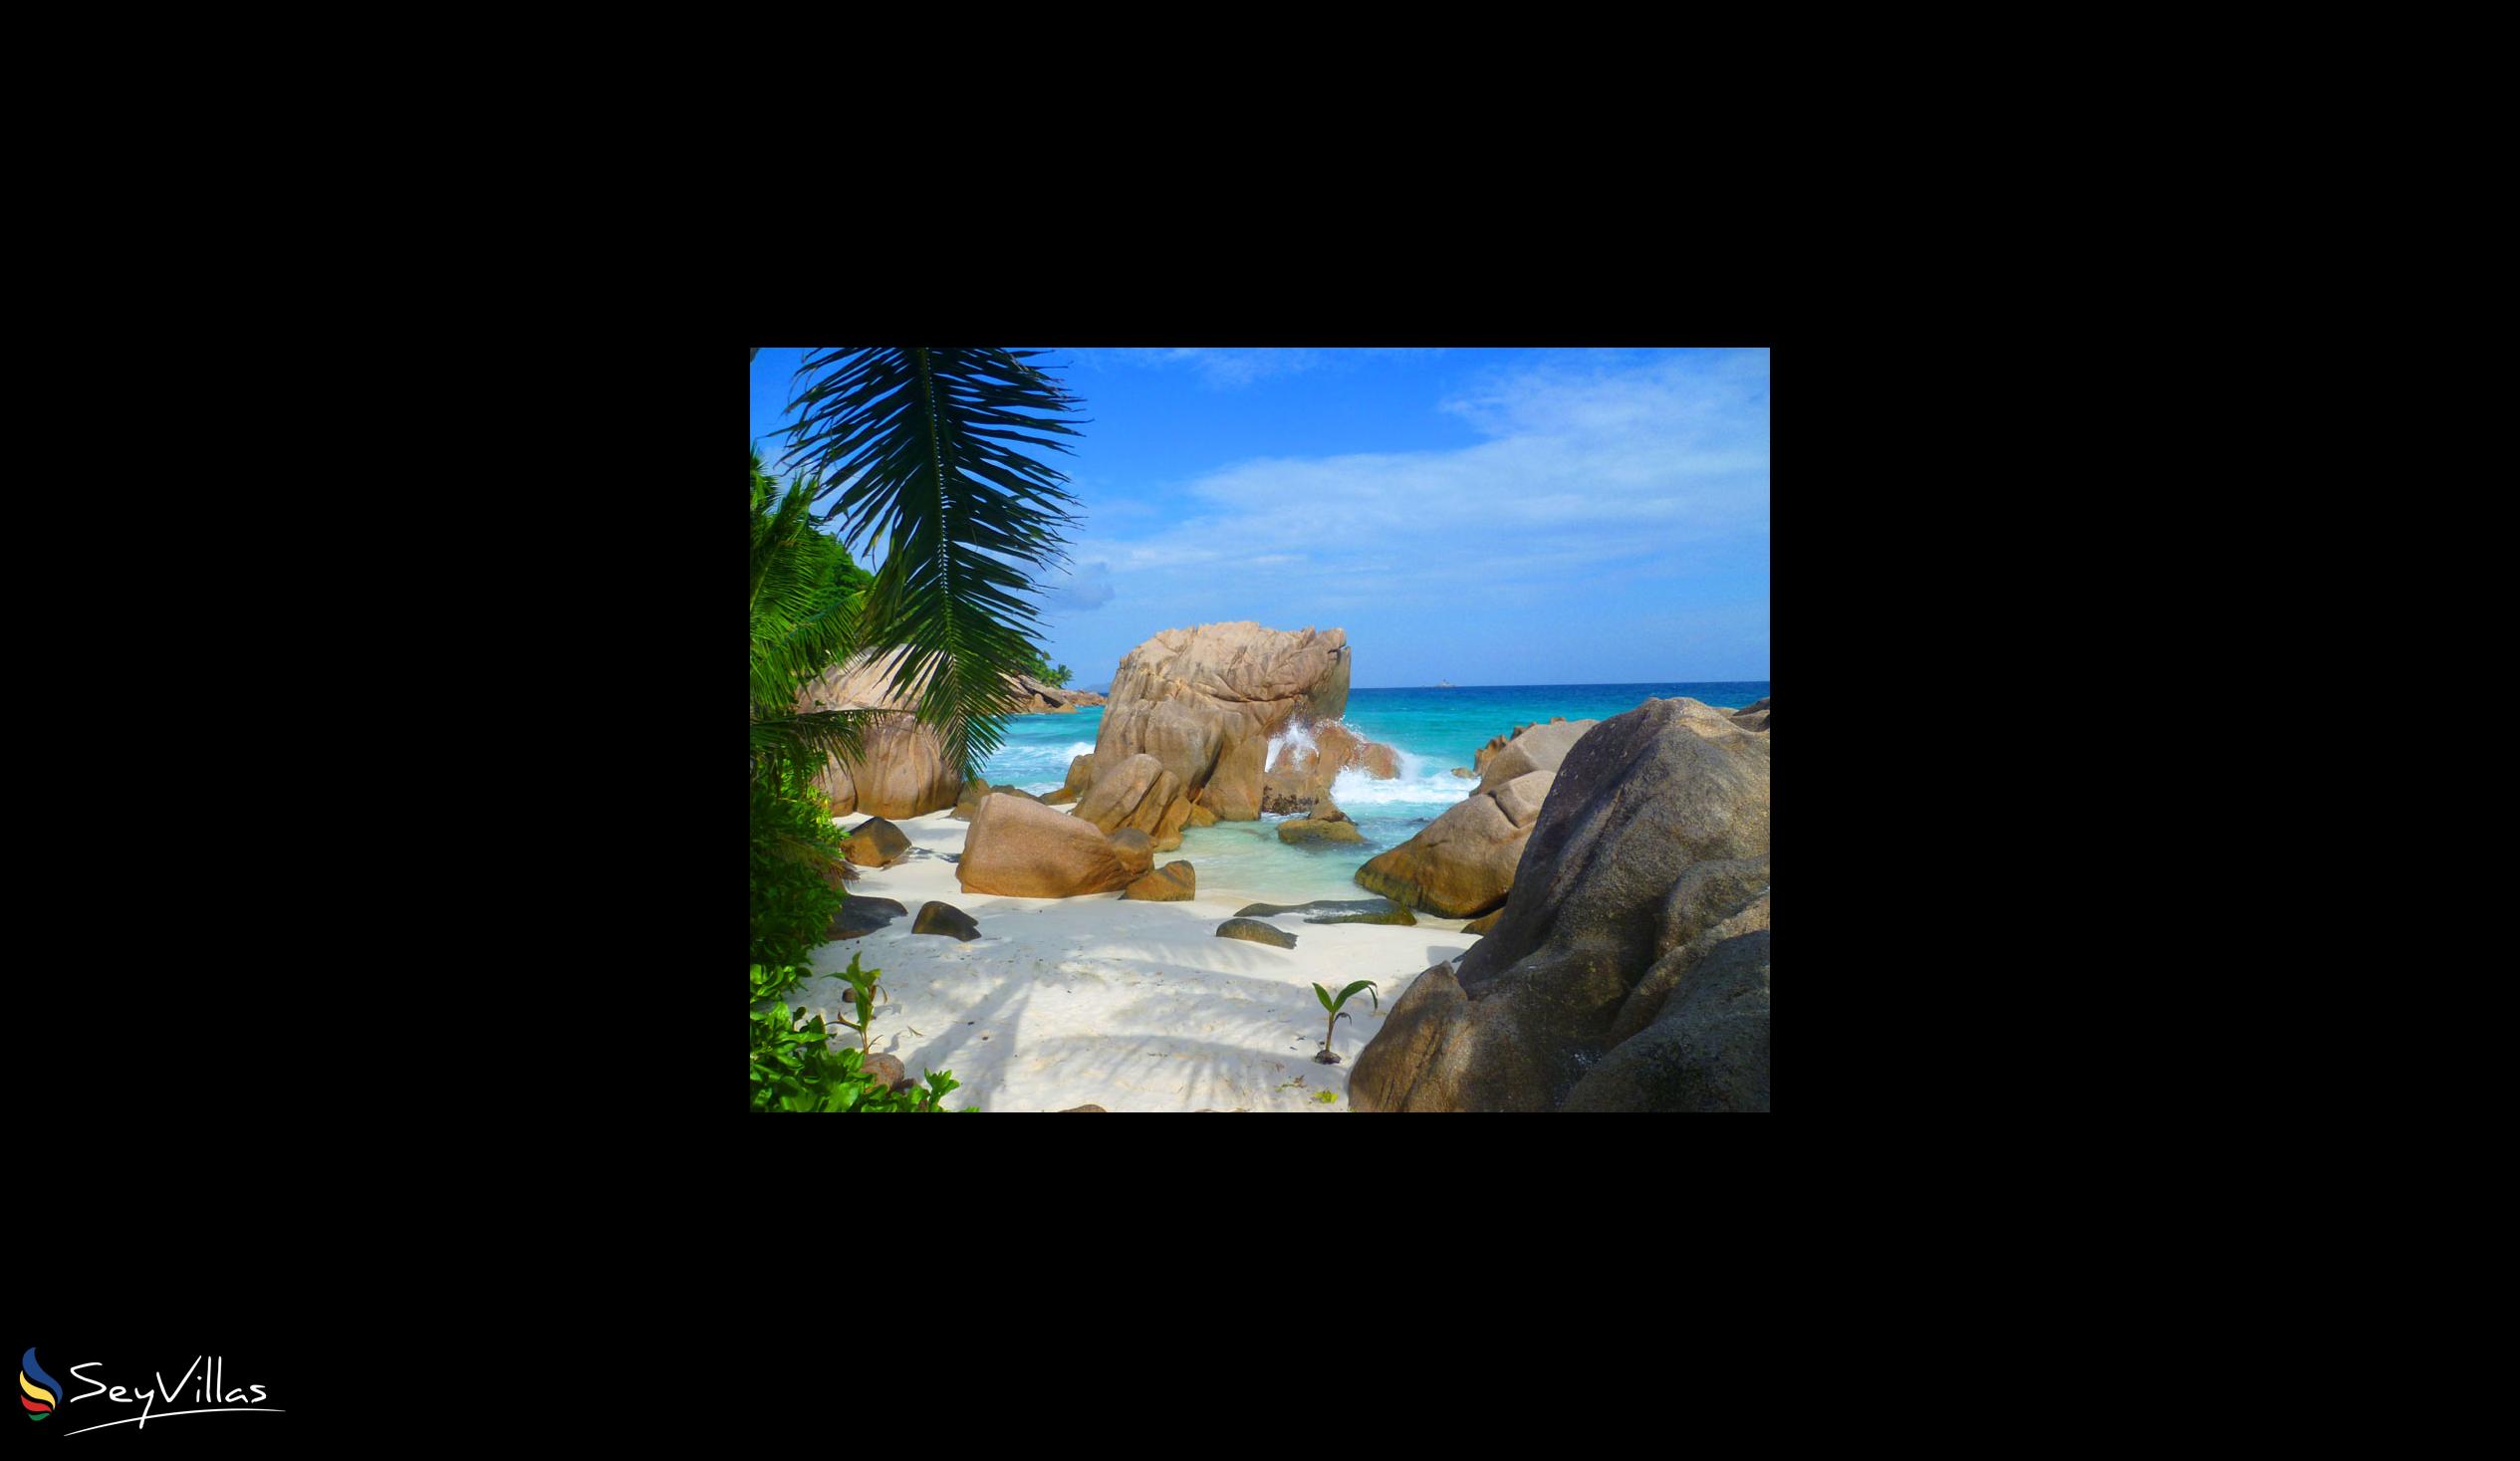 Foto 36: Le Relax Beach House - Strände - La Digue (Seychellen)